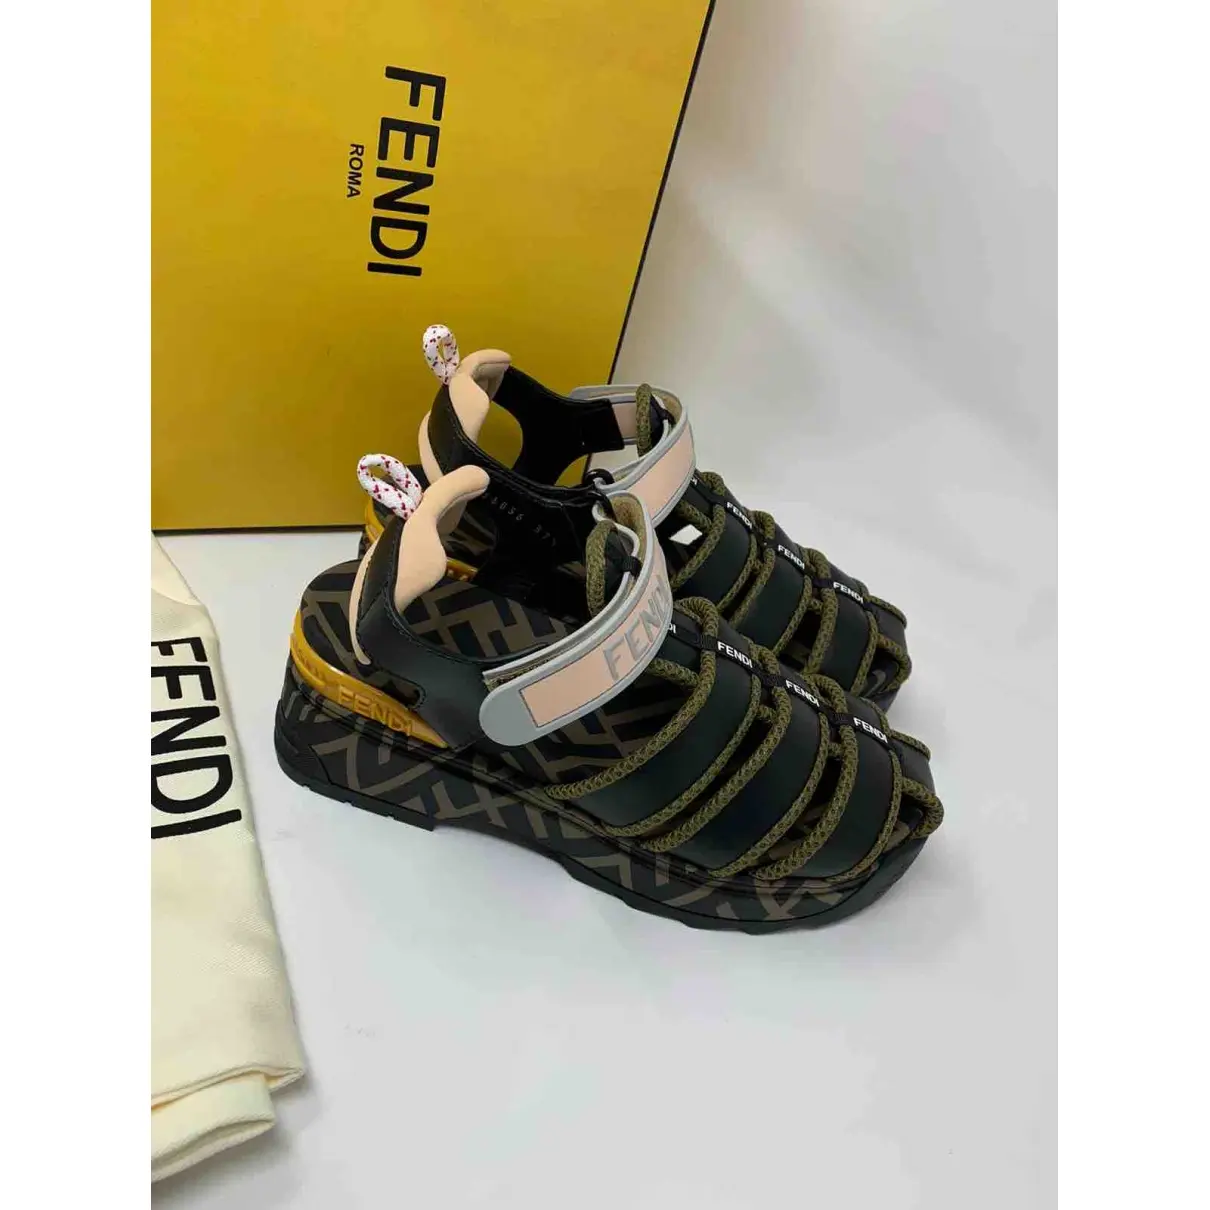 Fendi Leather sandal for sale